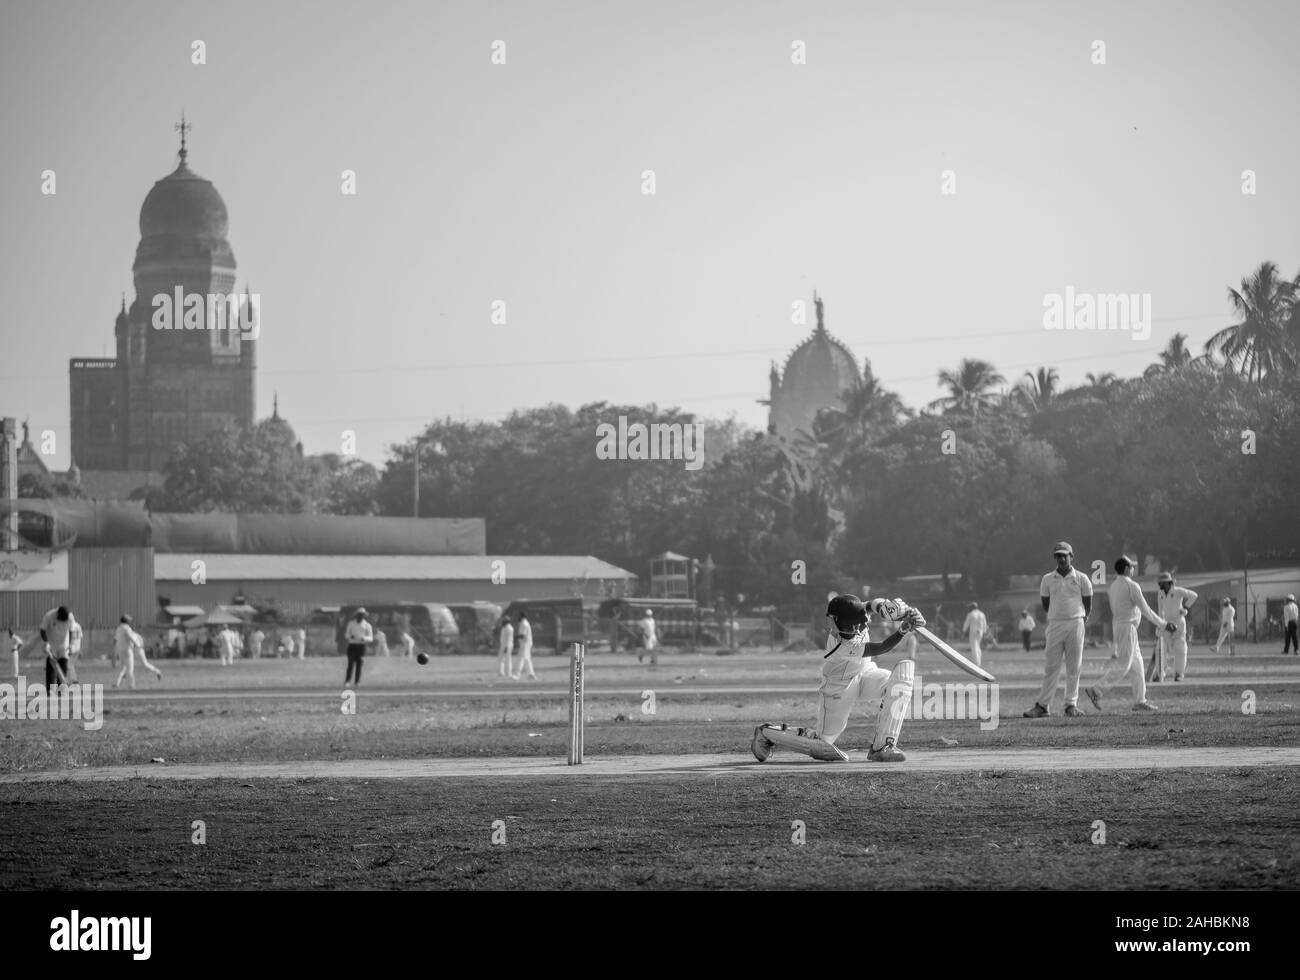 Mumbai, Indien - Dezember 14, 2019: Indias berühmtesten sport Kricket durch Kinder auf lokaler Mumbai Masse praktiziert Stockfoto